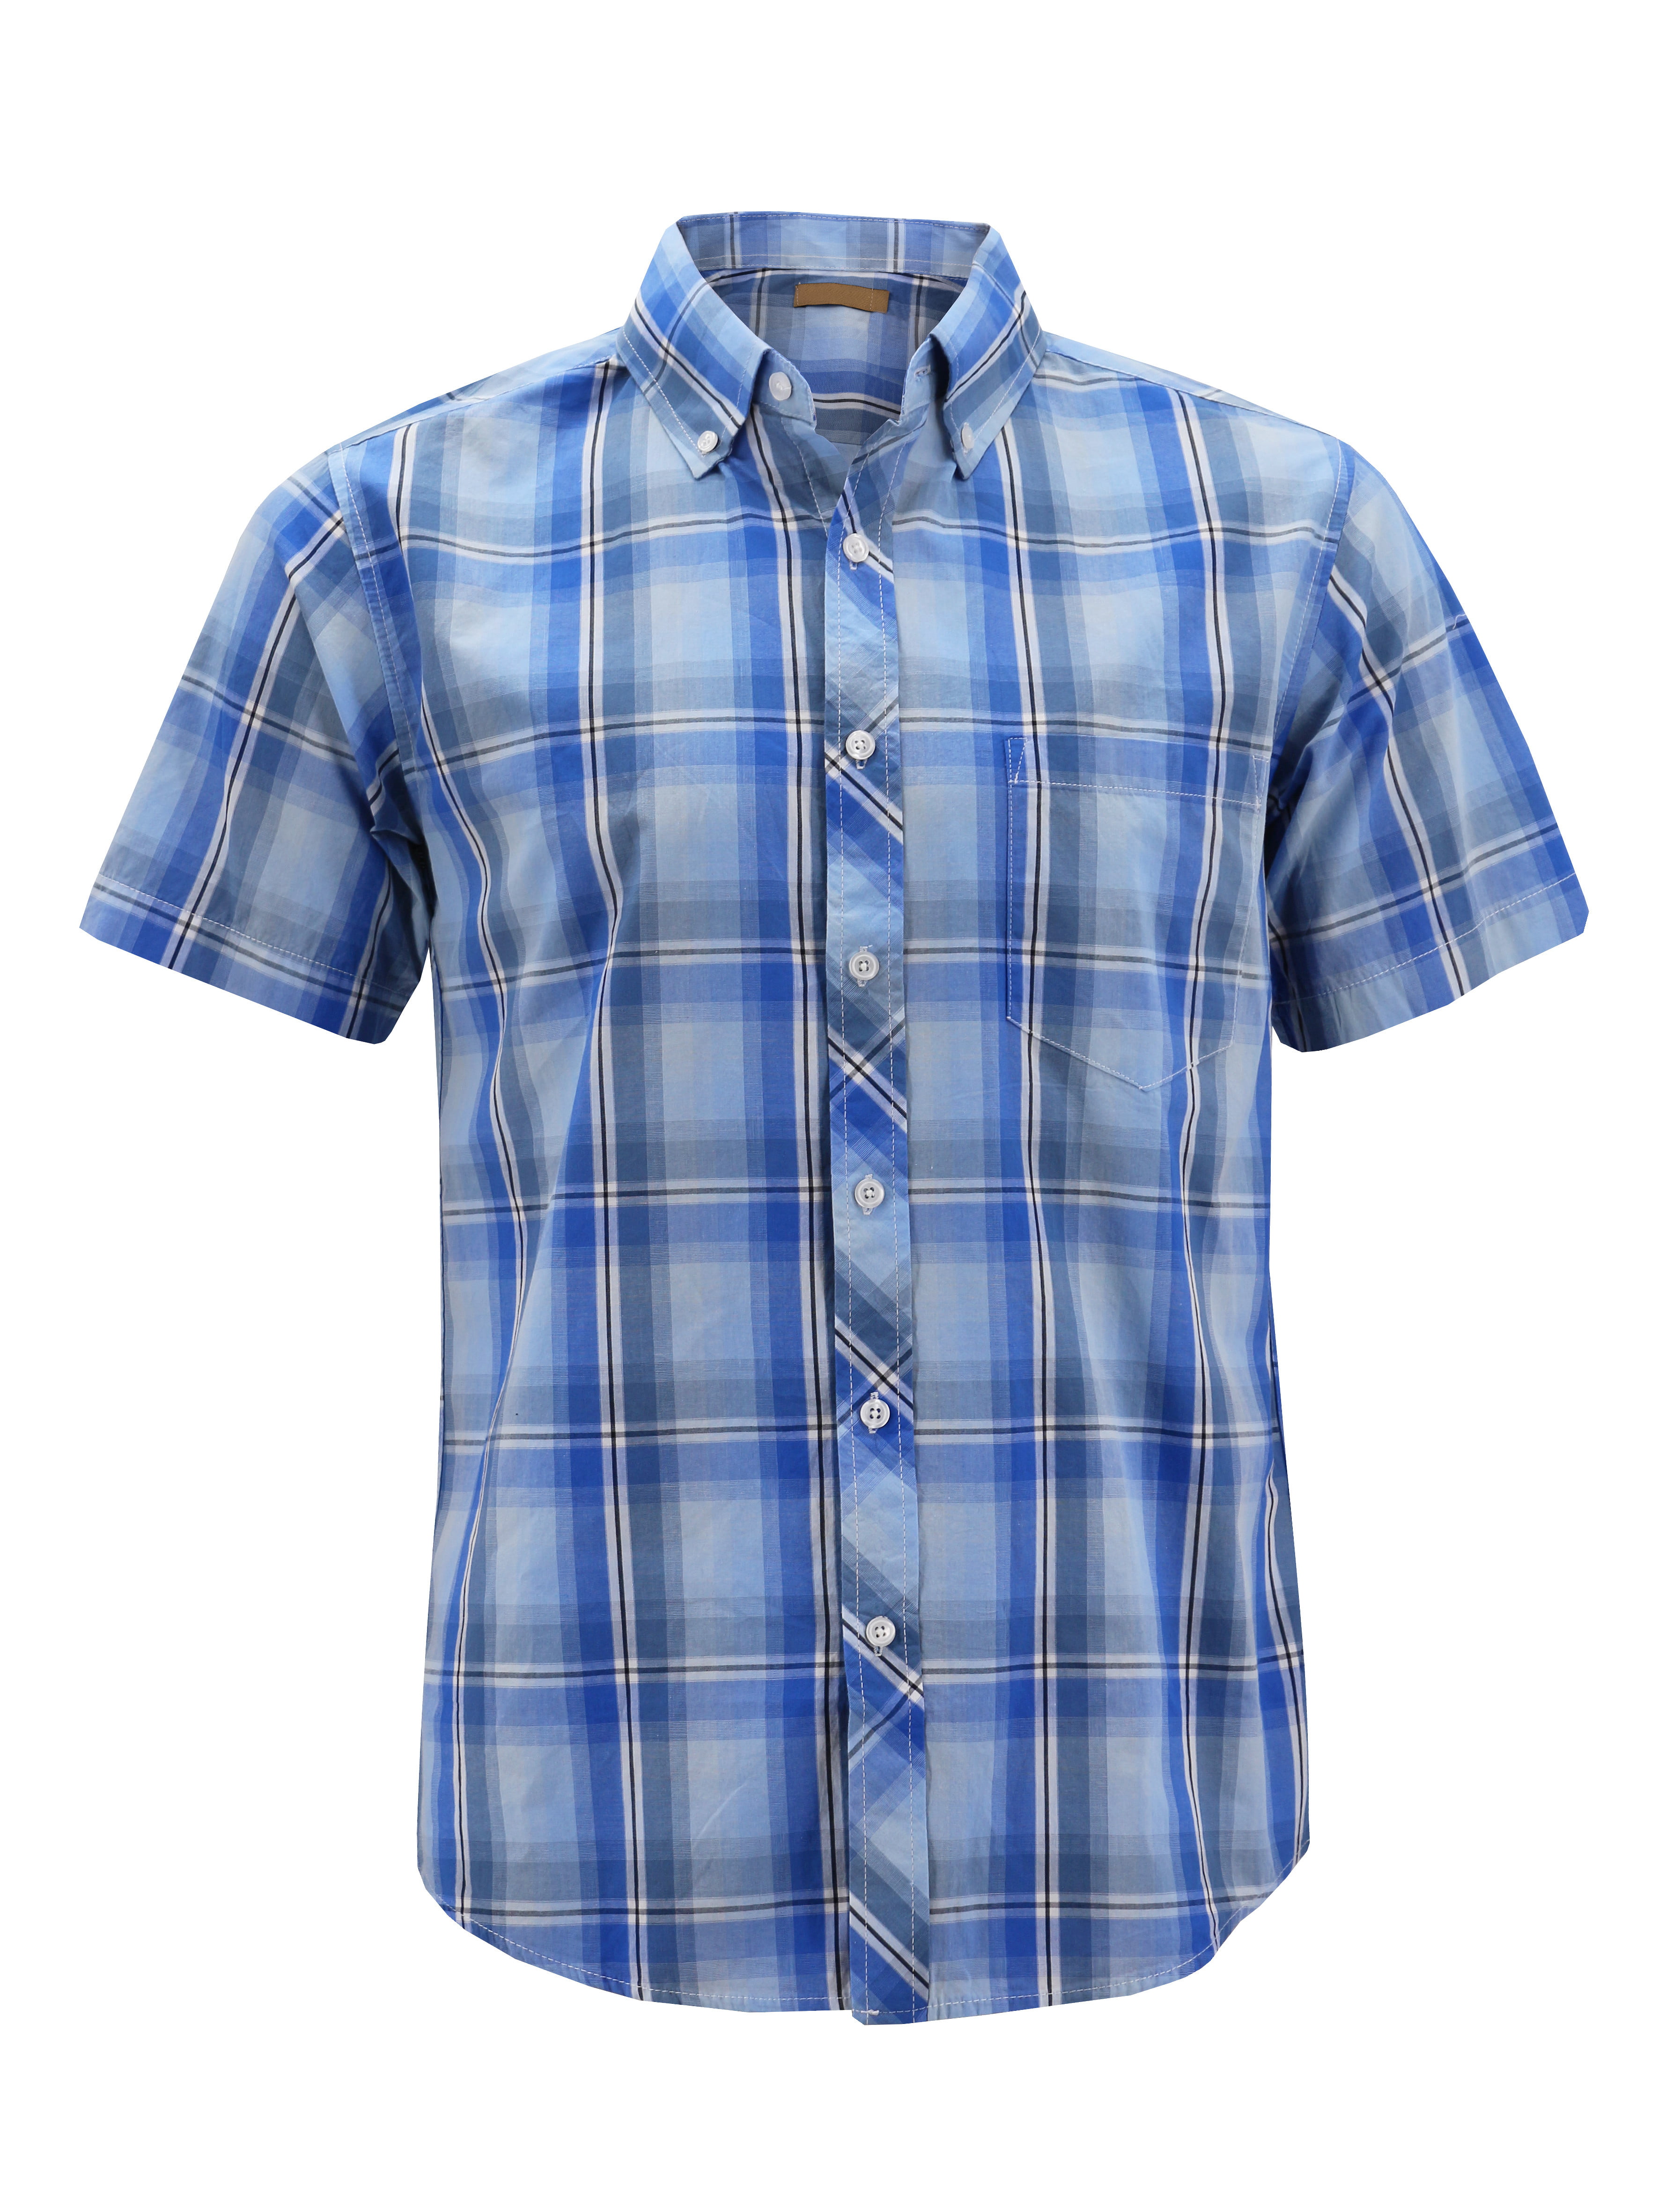 Mens Cotton Casual Short Sleeve Classic Collared Plaid Button Up Dress Shirt 11 Light Blue 0079